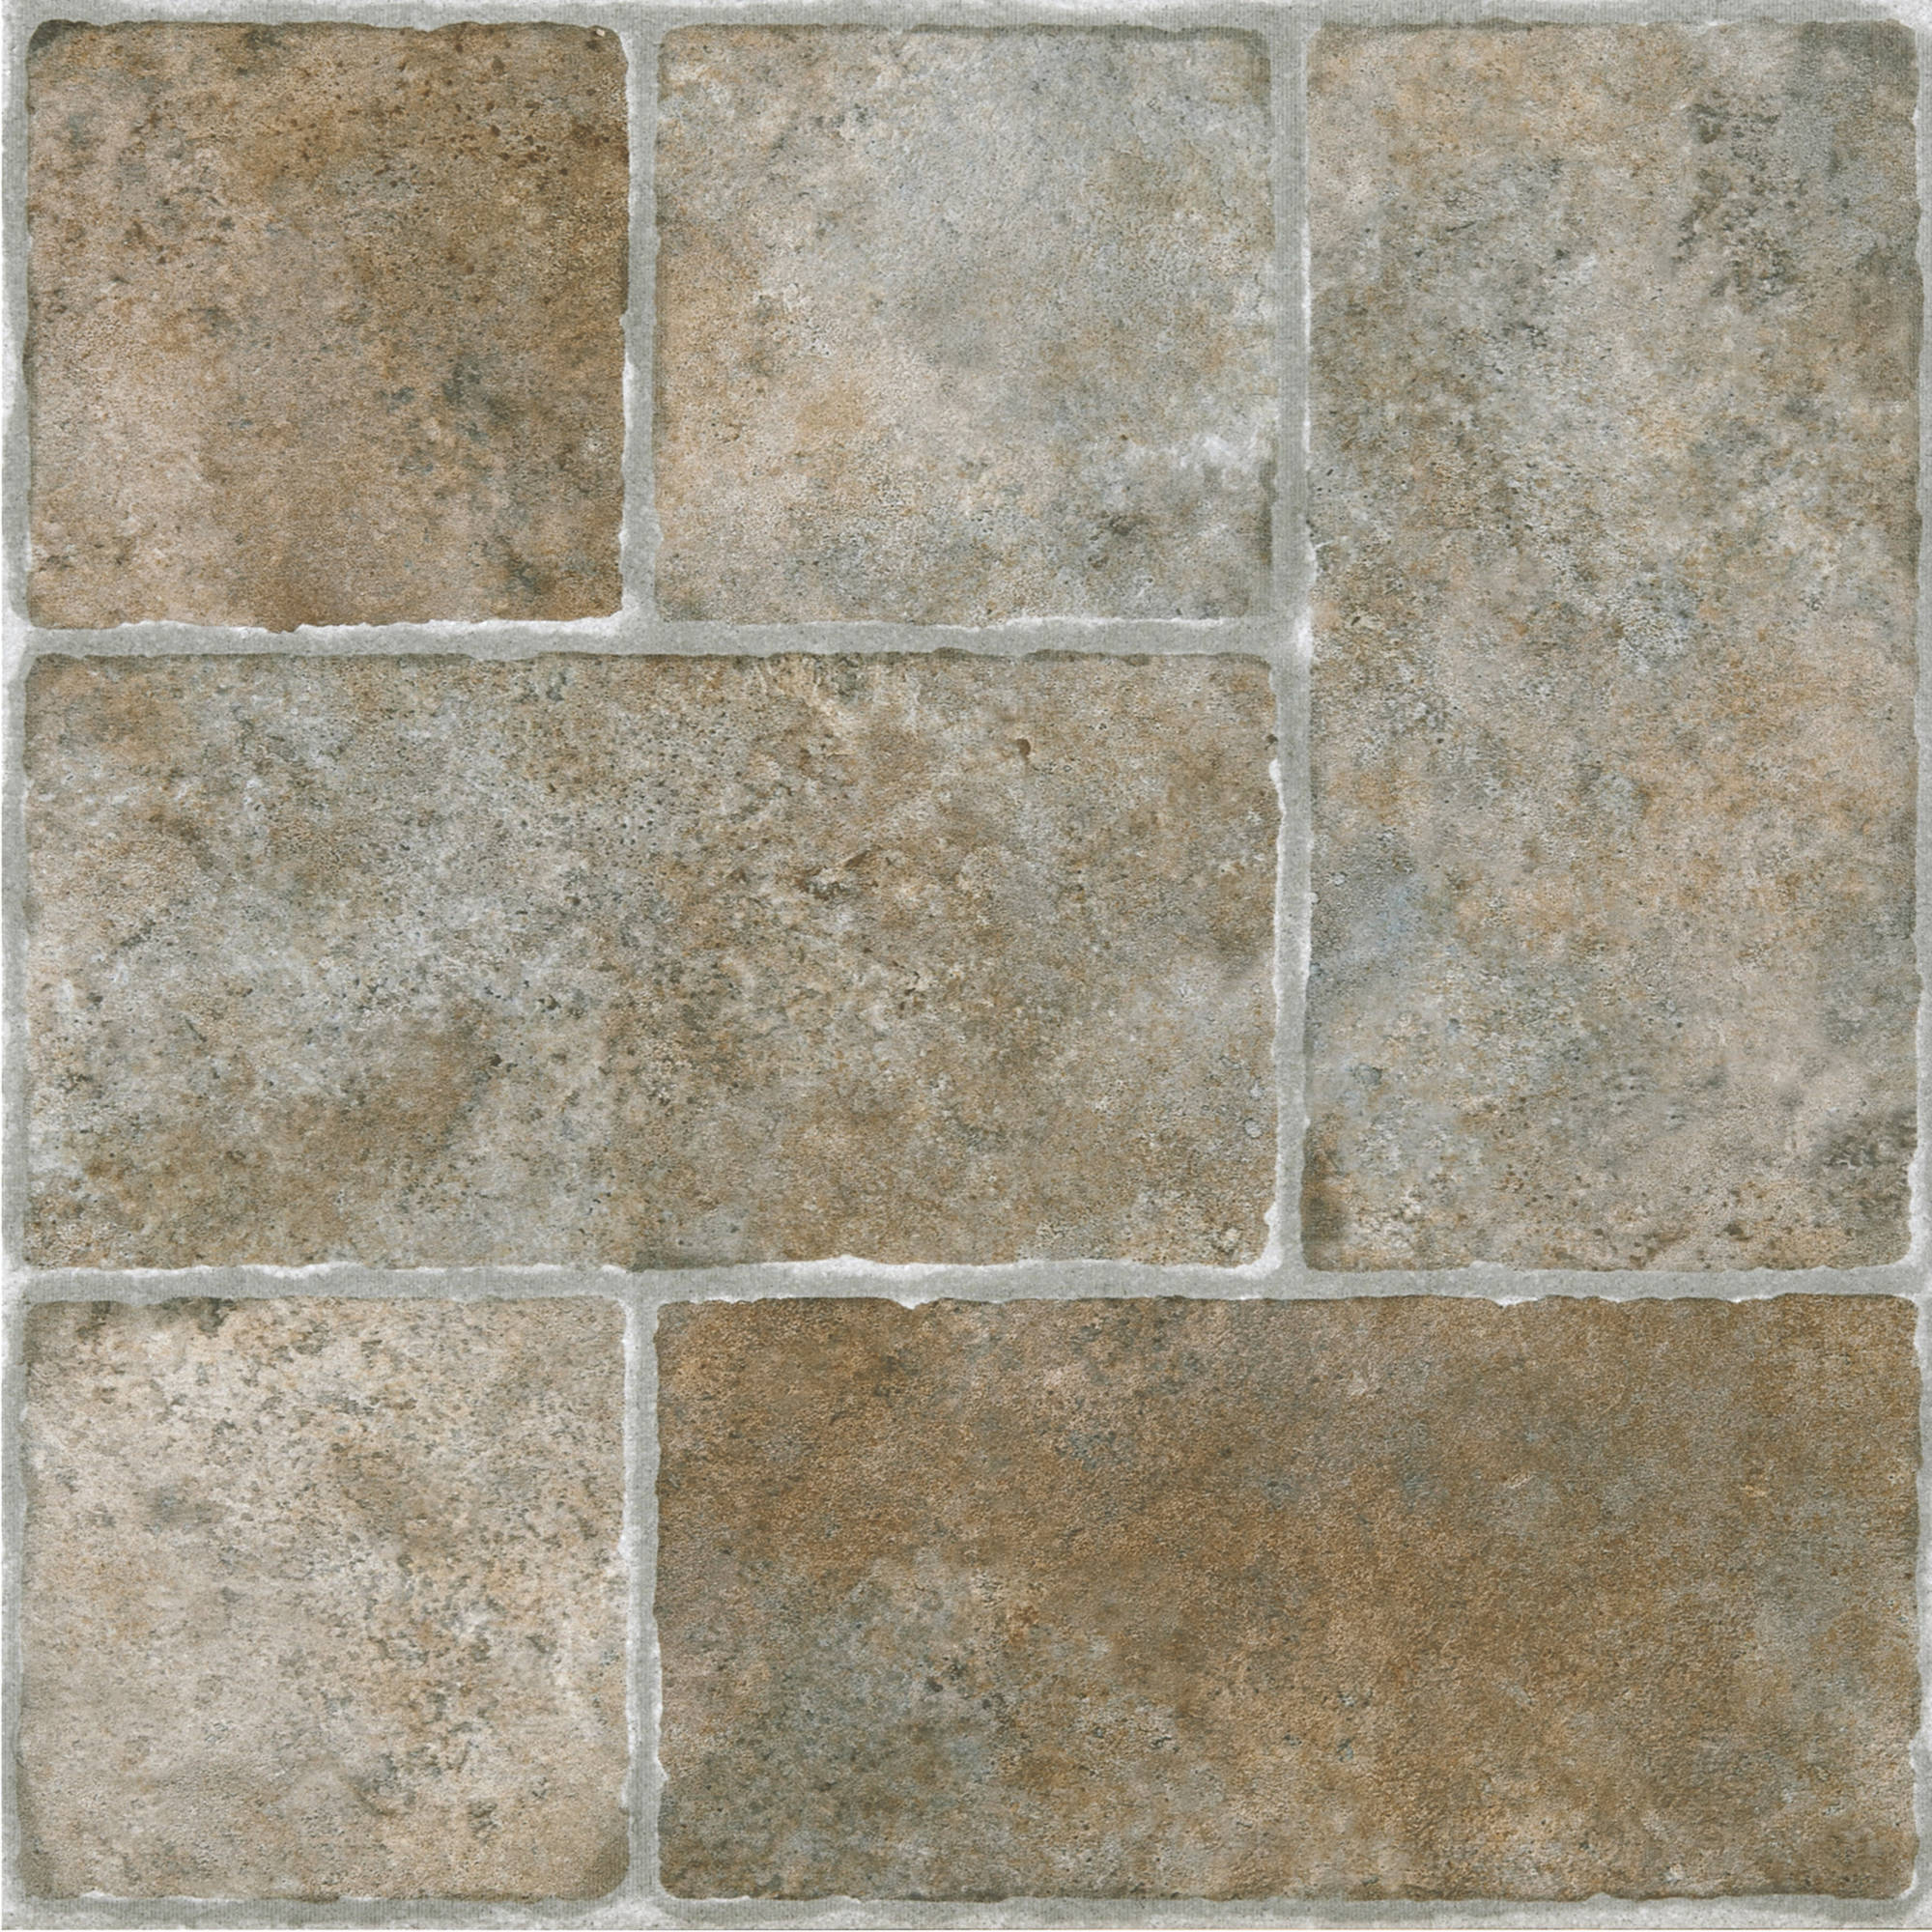 Vinyl flooring tiles nexus quartose granite 12x12 self adhesive vinyl floor tile - 20 tiles/20 CGYHRWR